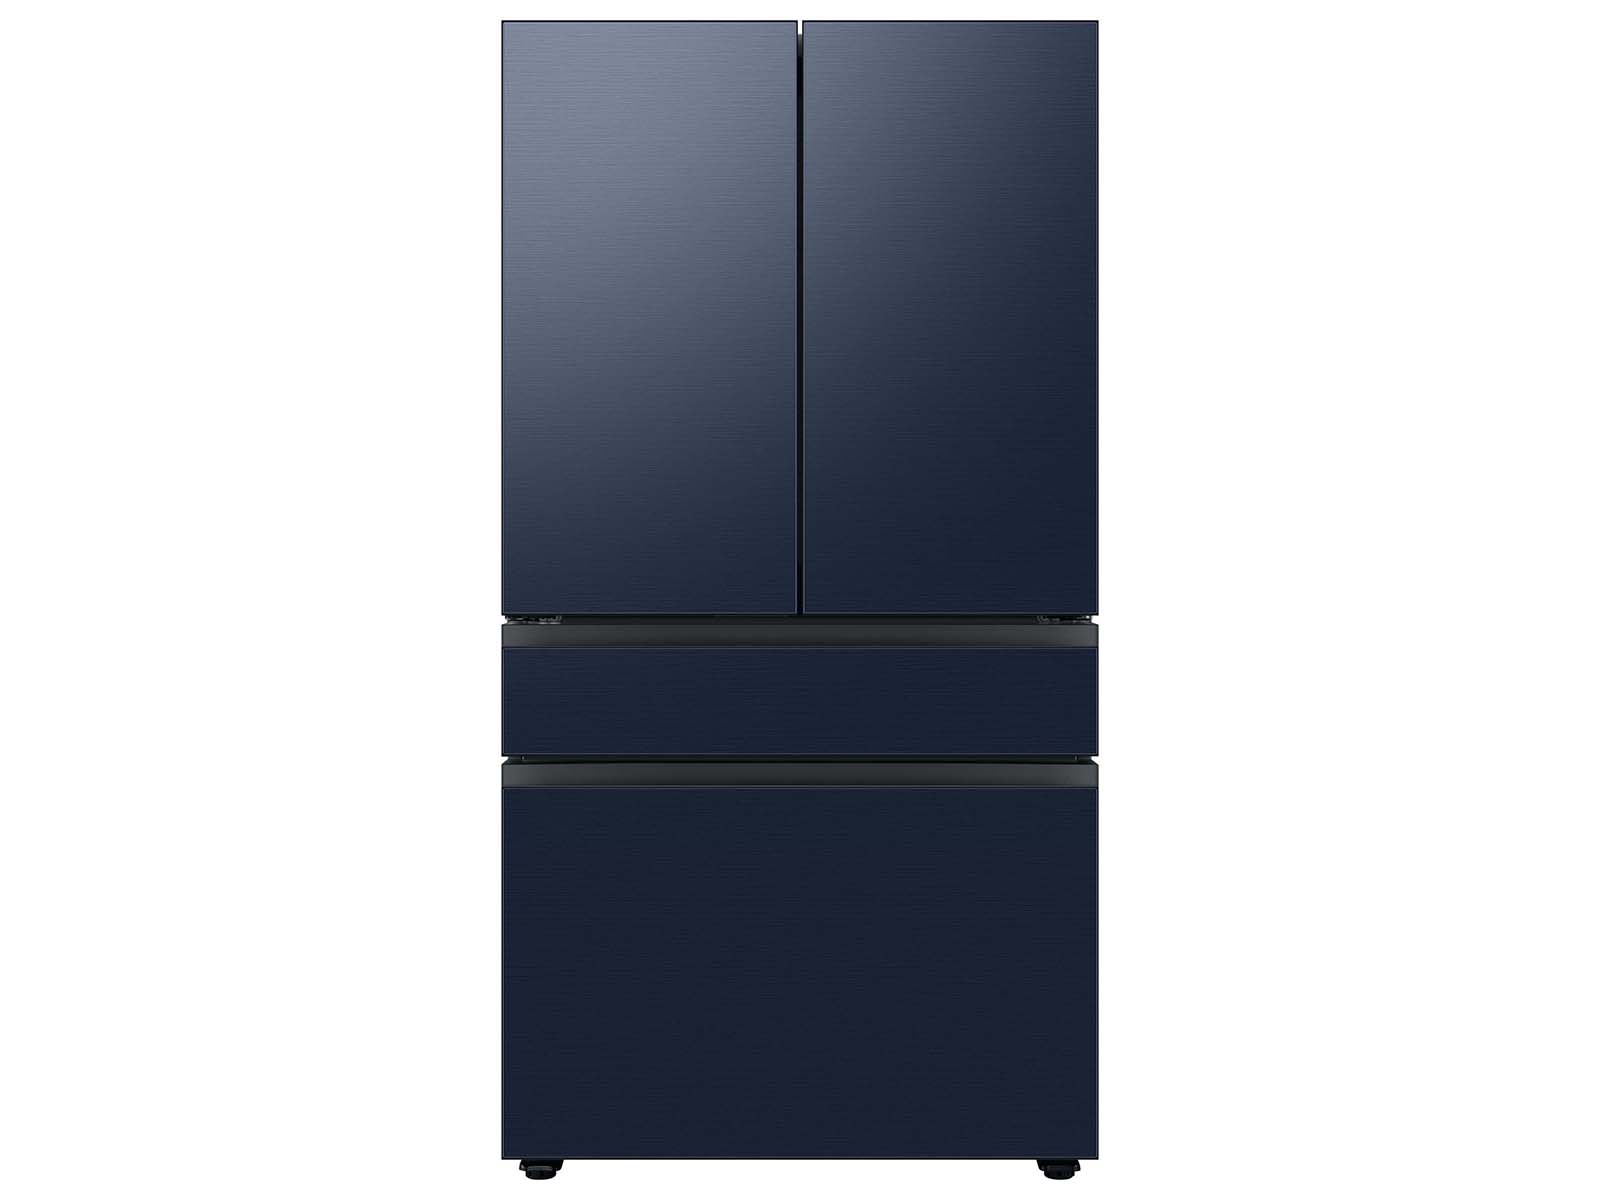 Bespoke 4-Door French Door Refrigerator (29 cu. ft.) with Customizable Door Panel Colors and Beverage Center&trade; in Navy Steel with Stainless Steel Middle Panel